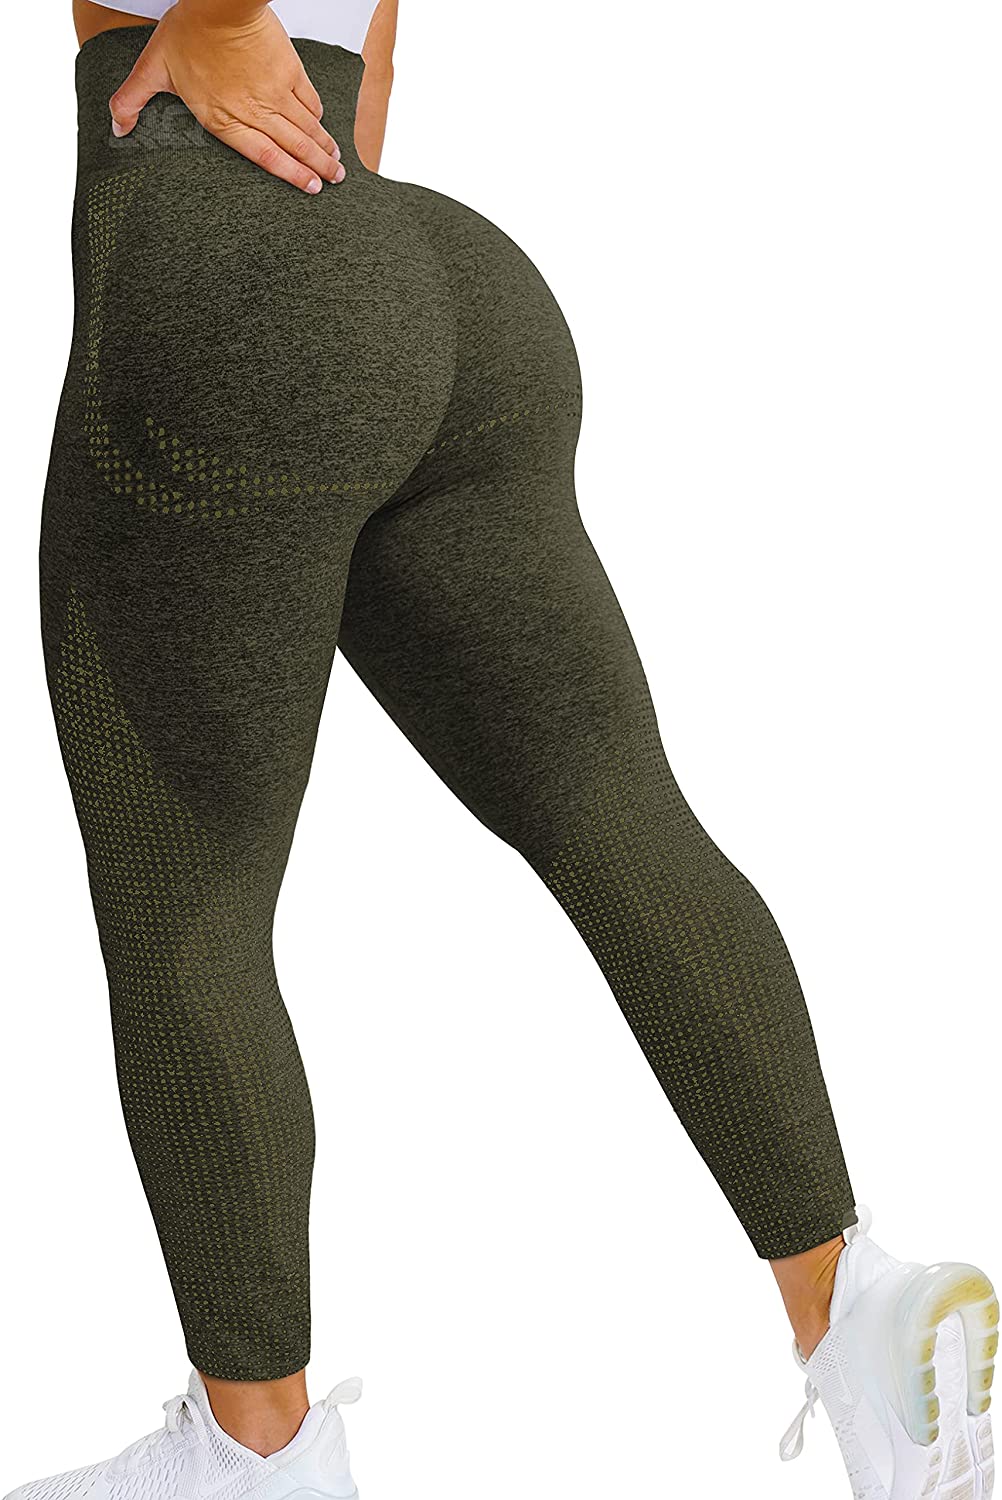 QRIC Women's High Waist Workout Vital Seamless Leggings Butt Lift Yoga  Pants Stretchy Fitness Gym Tights Light Purple, L 